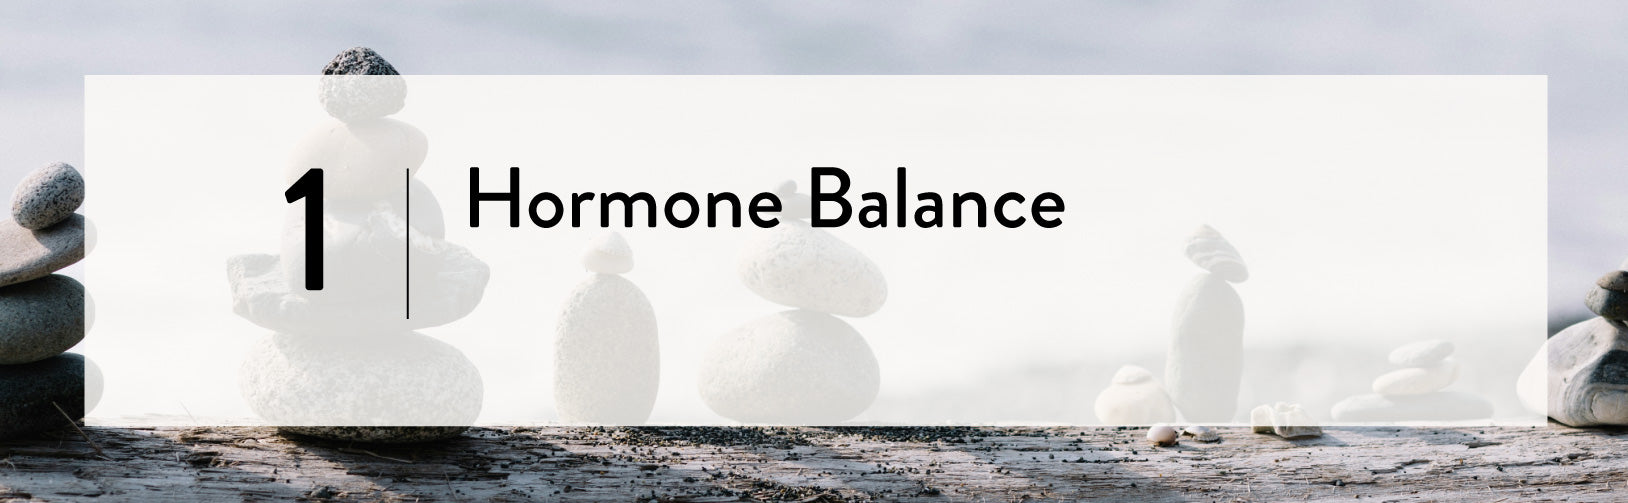 1: Hormone Balance 